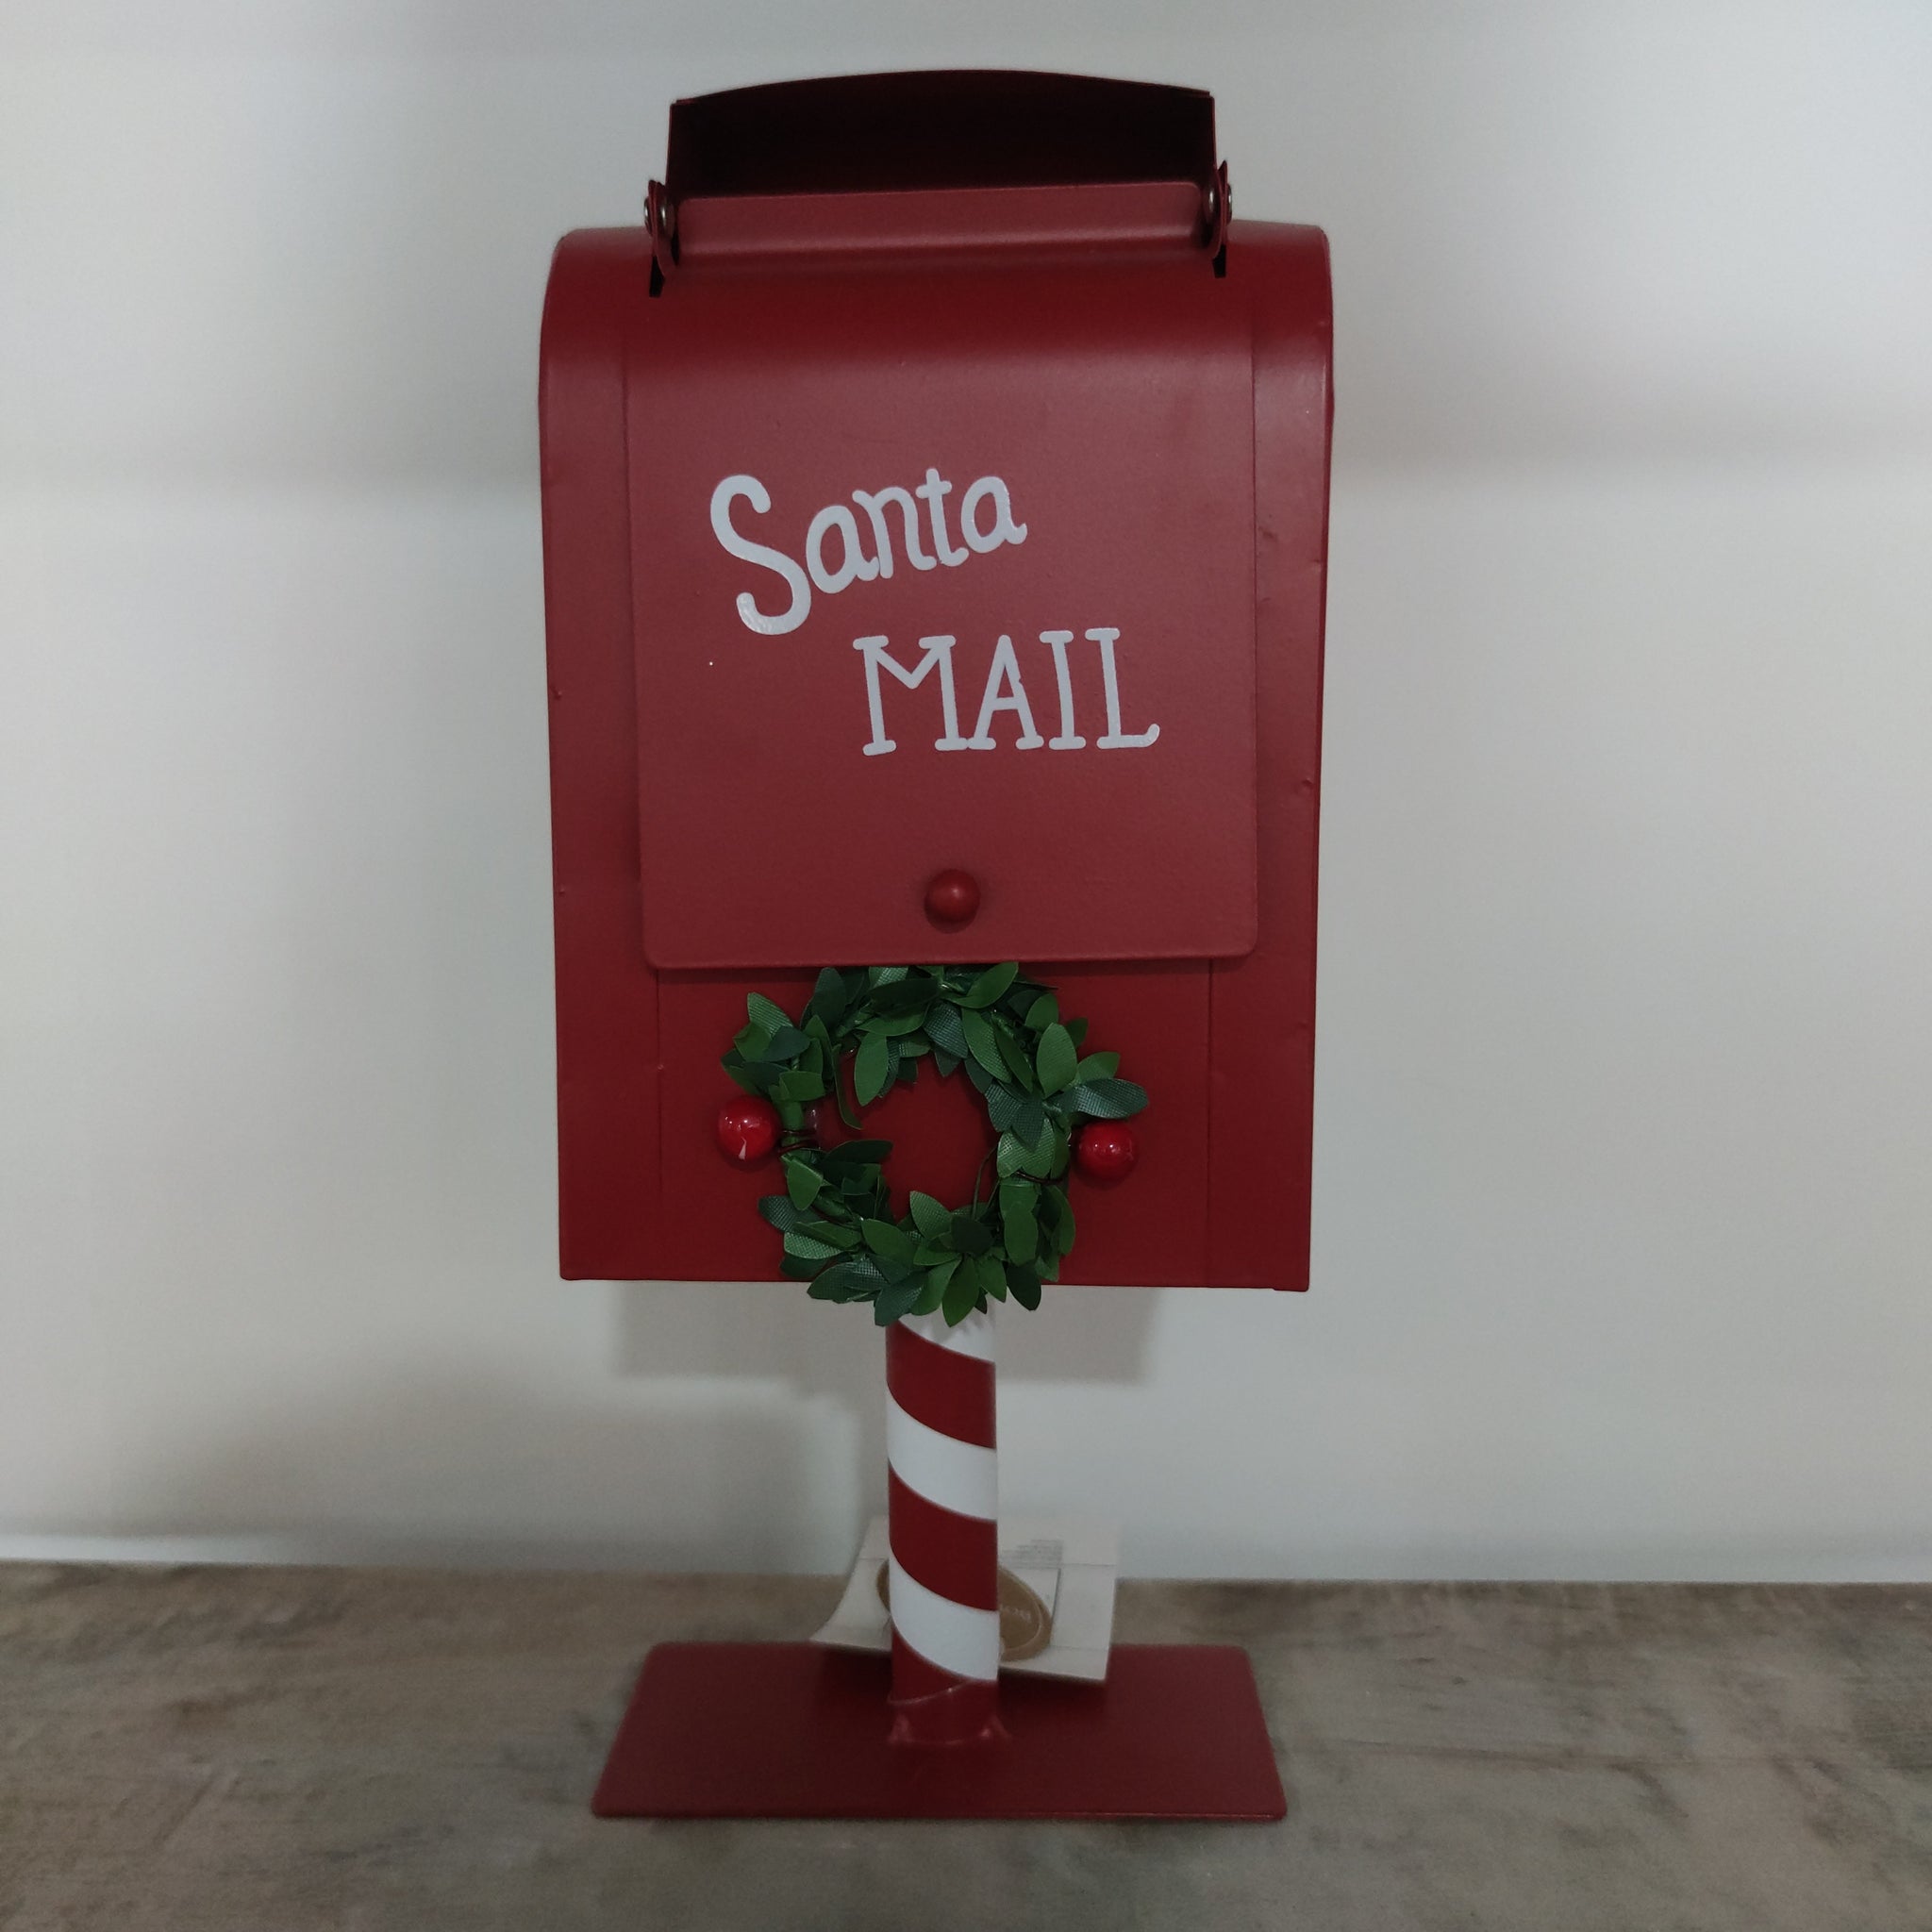 Cassetta della posta "Santa mail"